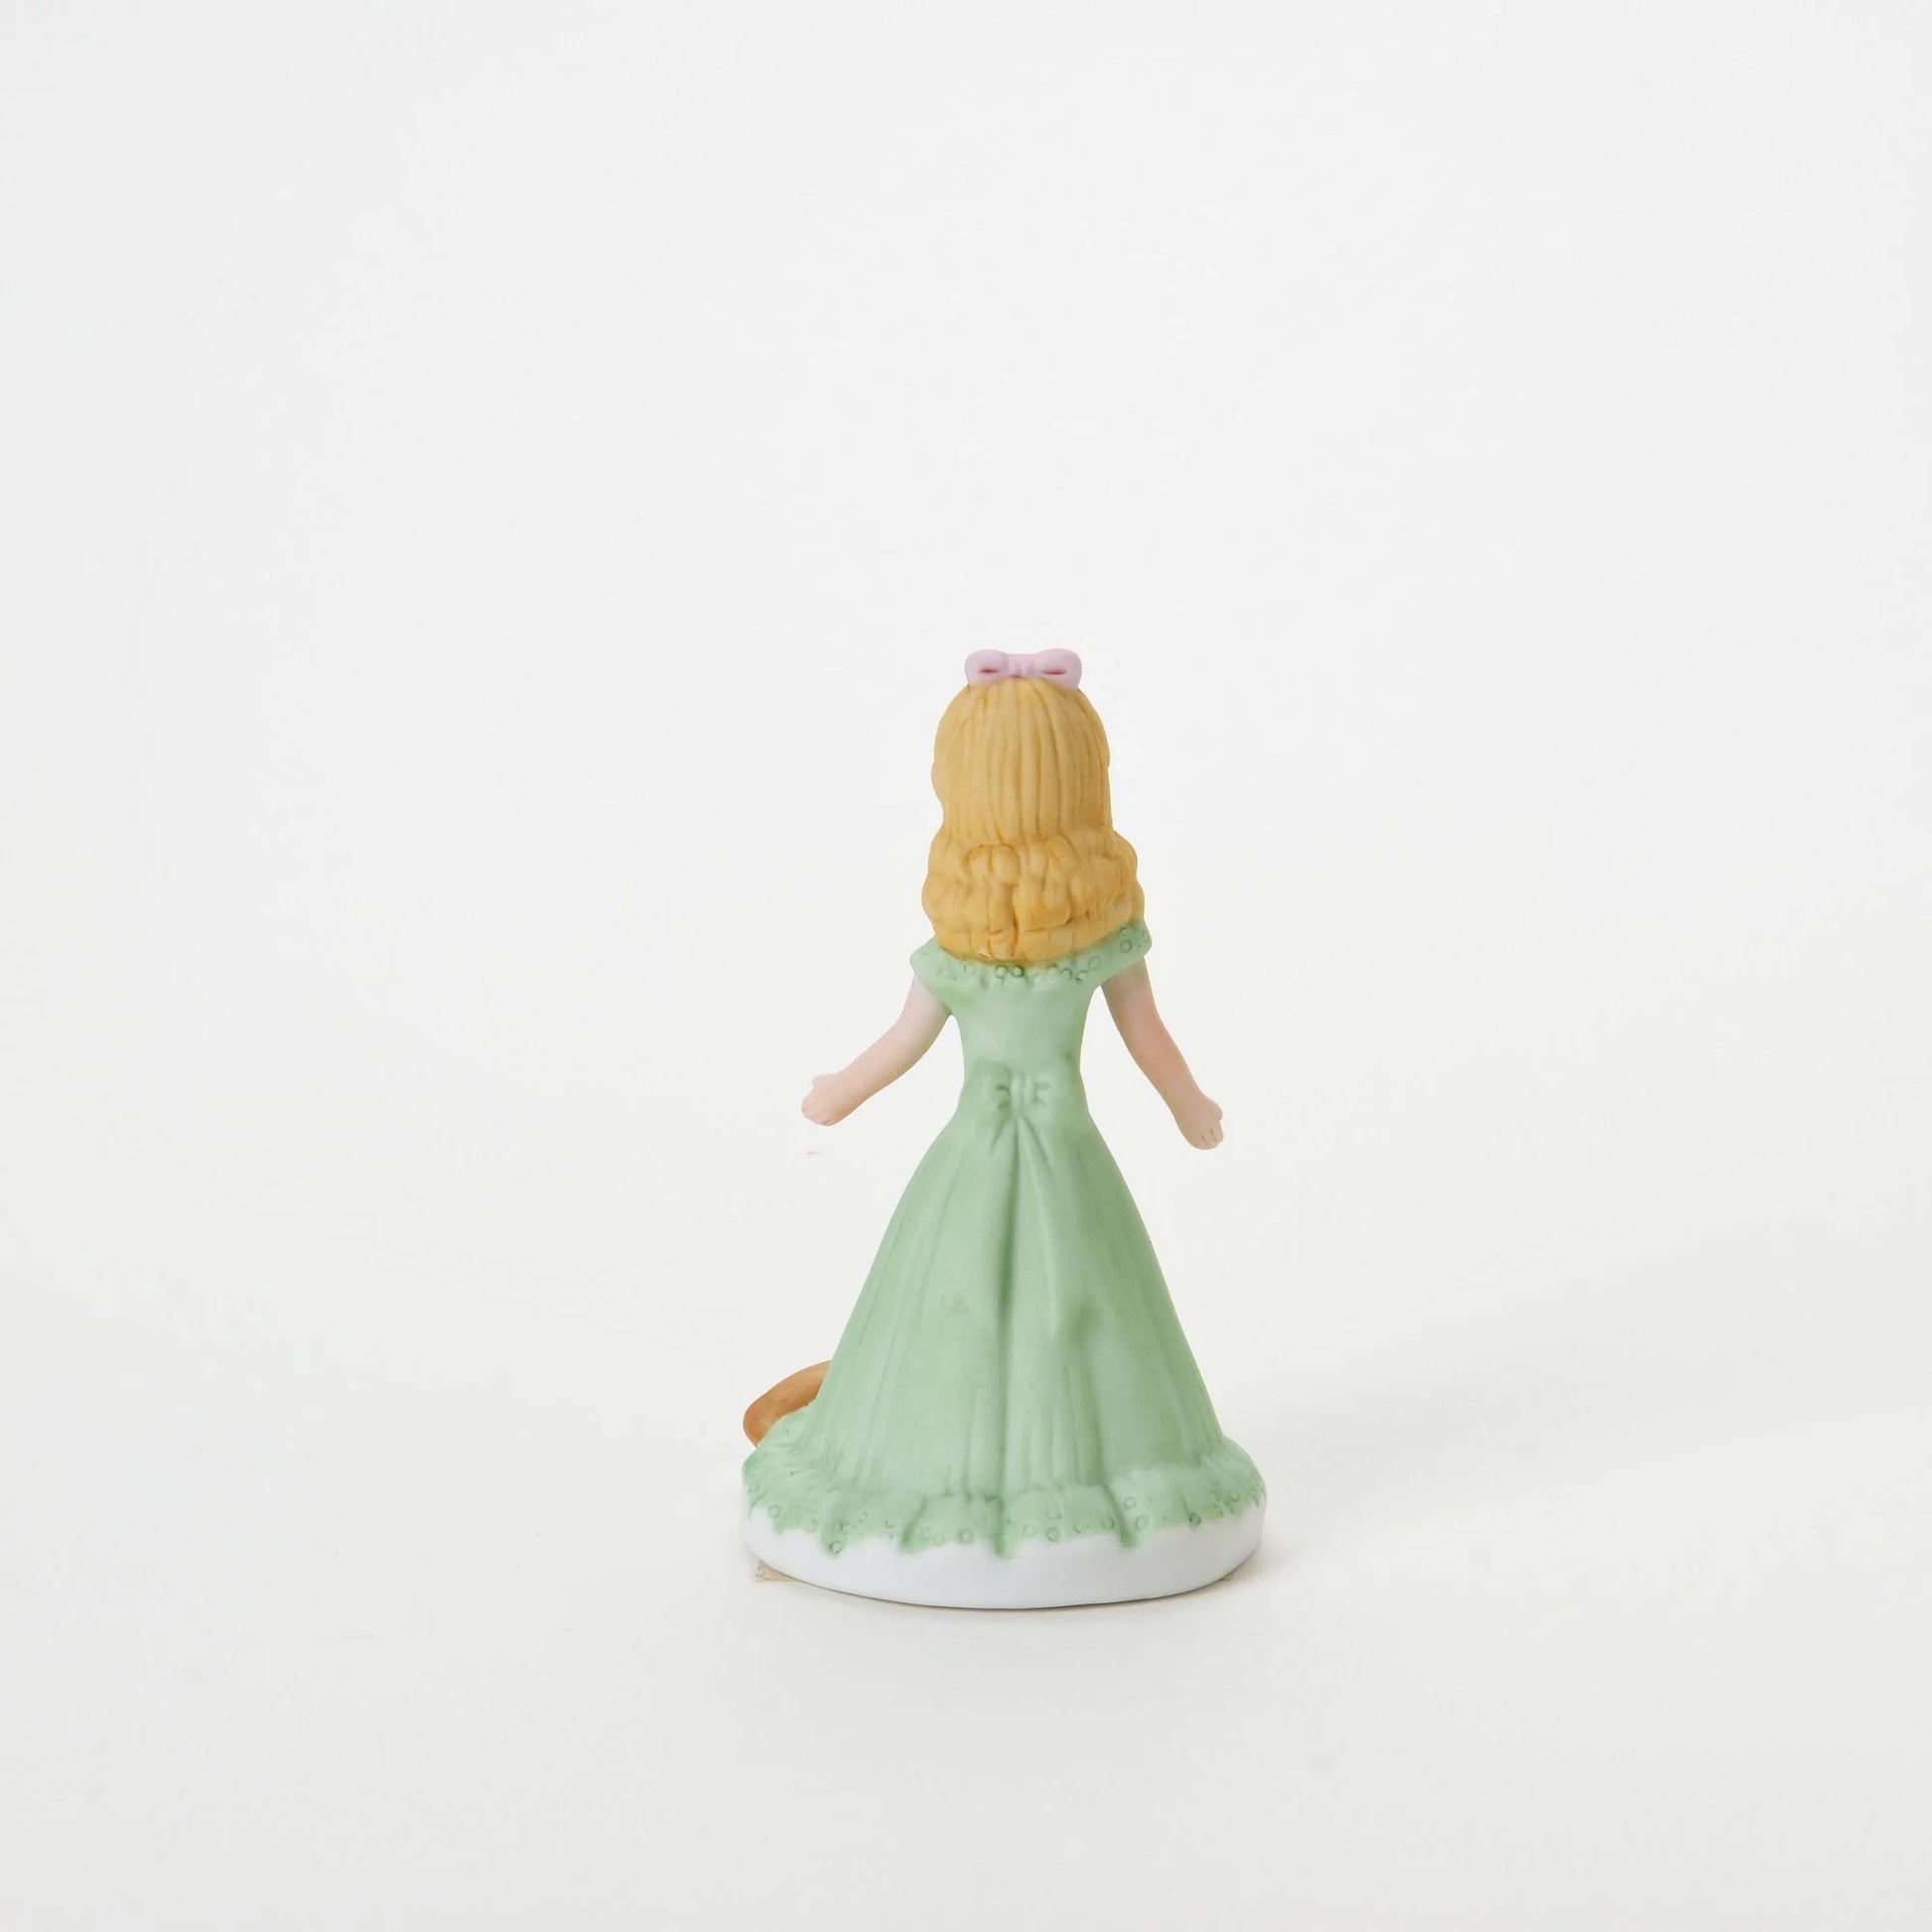 age 7 figurine back